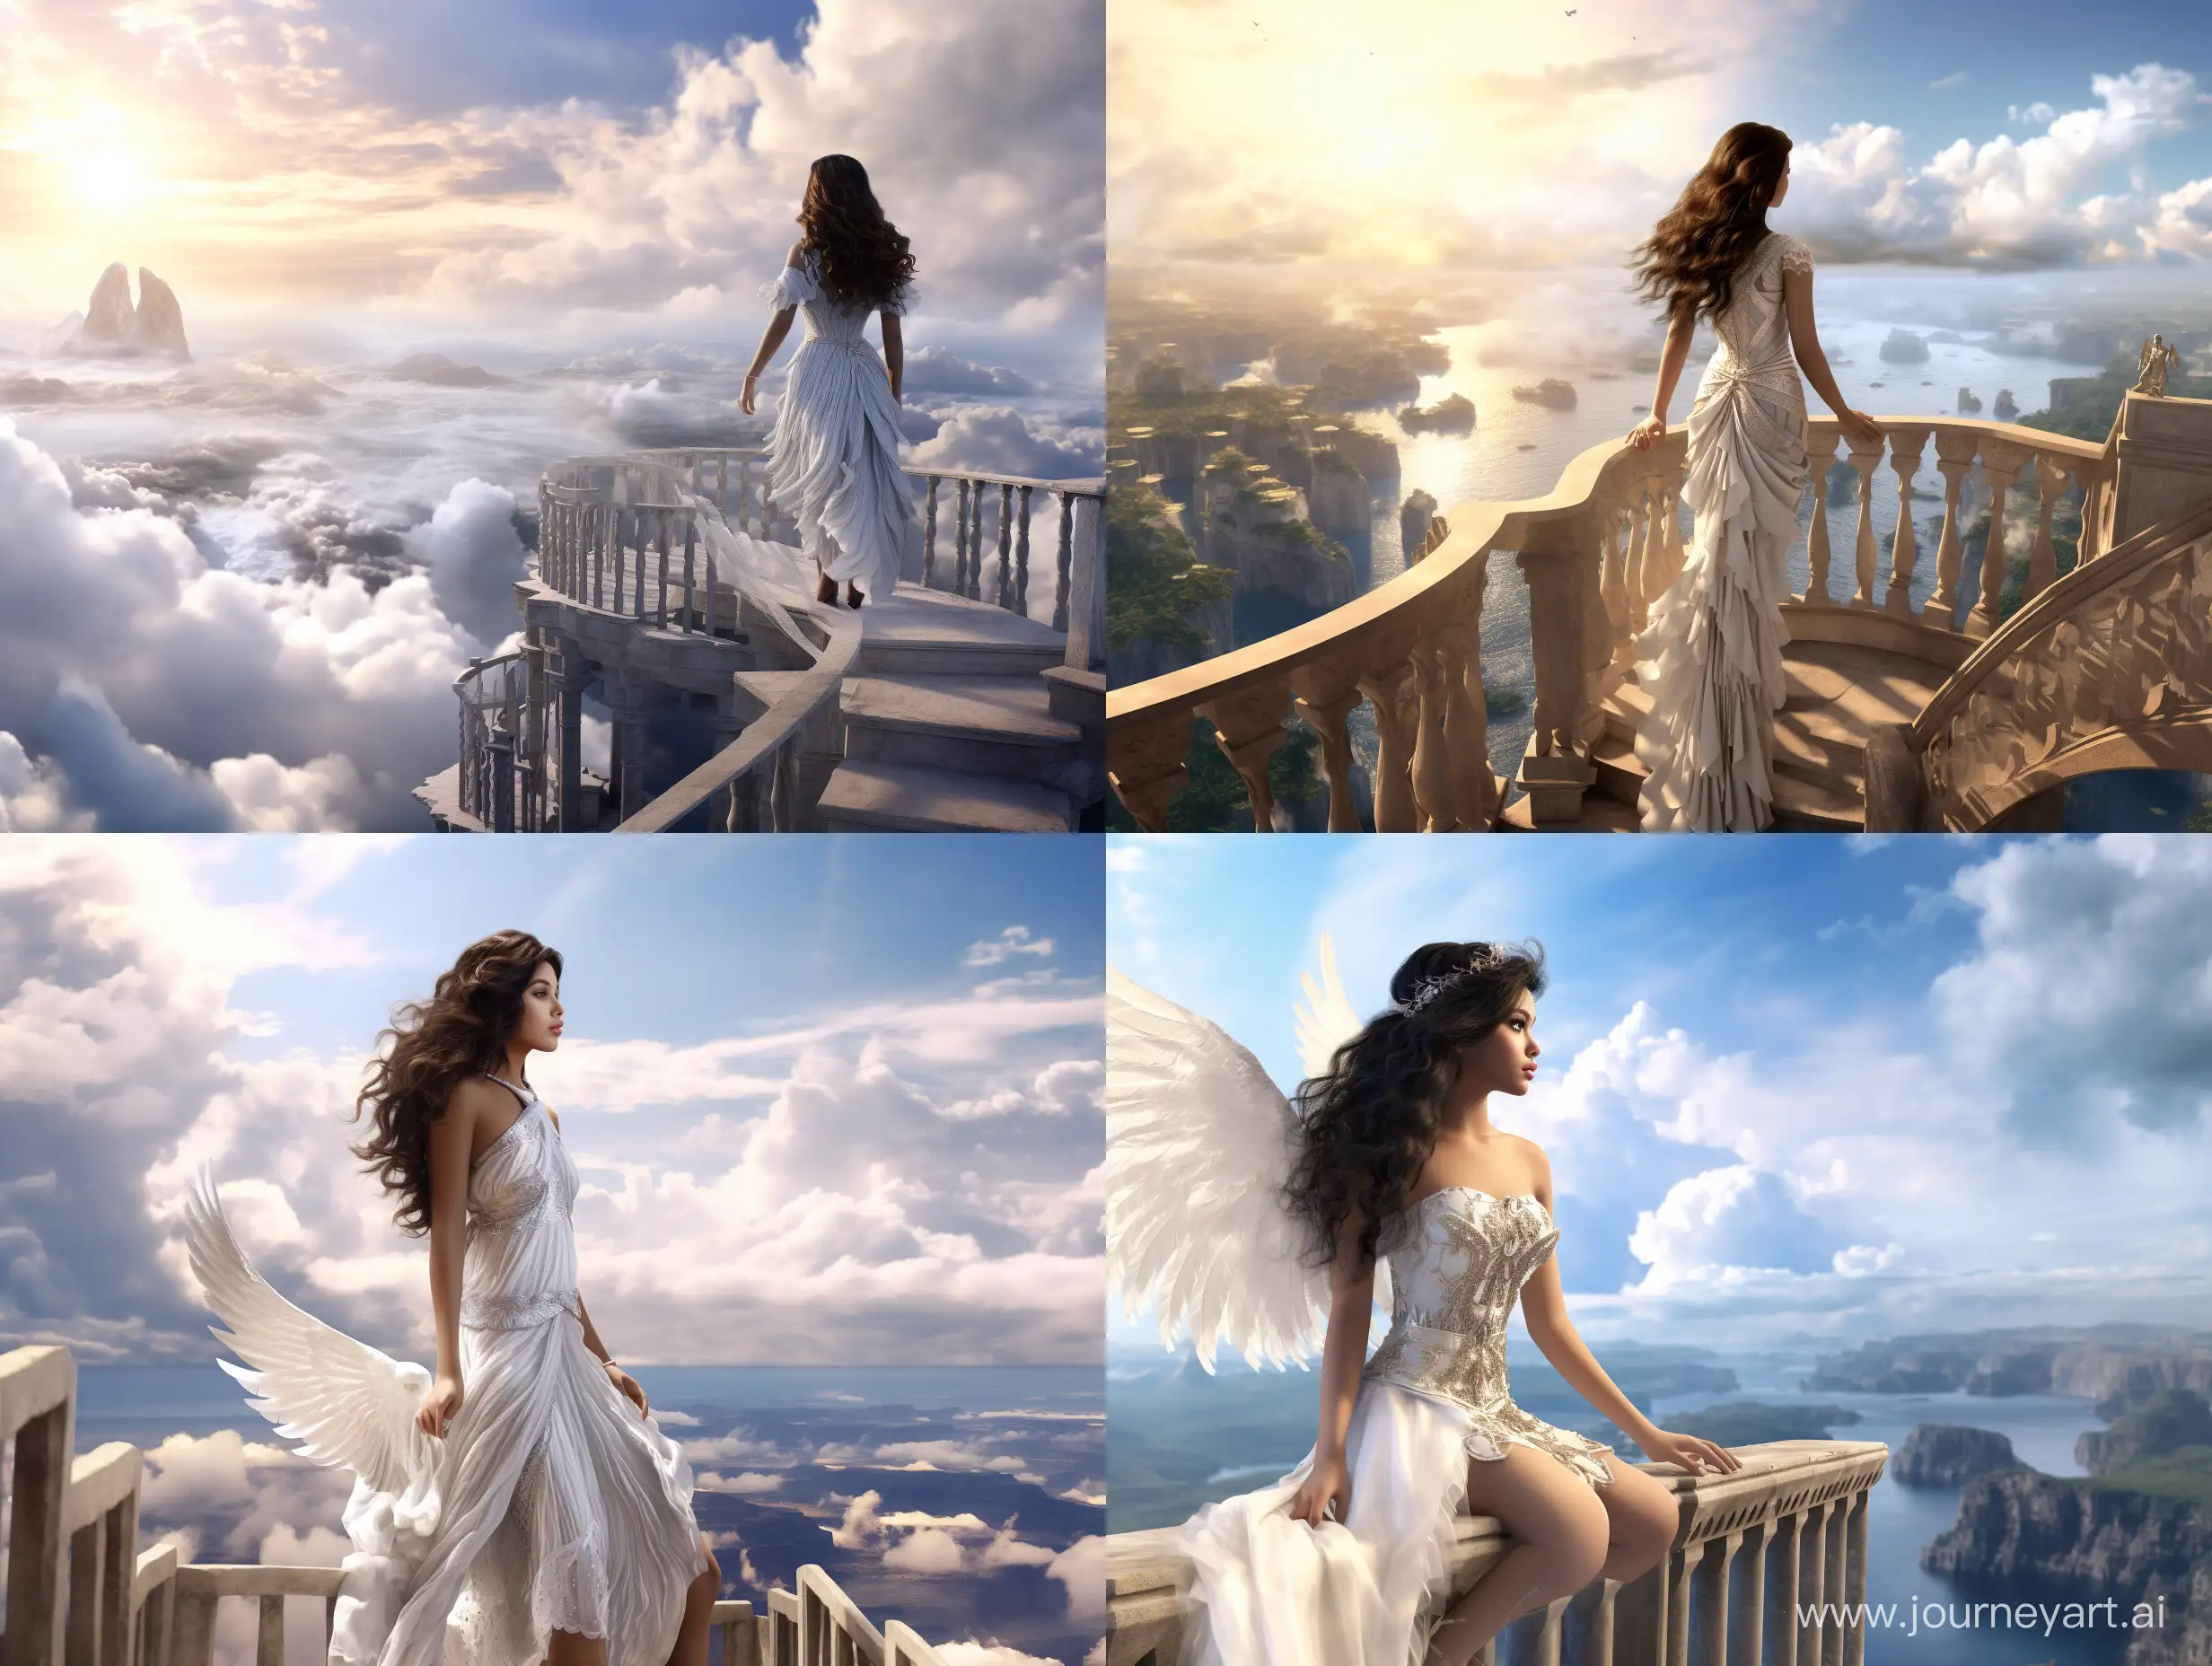 Selena-Gomez-in-Angelic-Attire-Contemplating-Celestial-Serenity